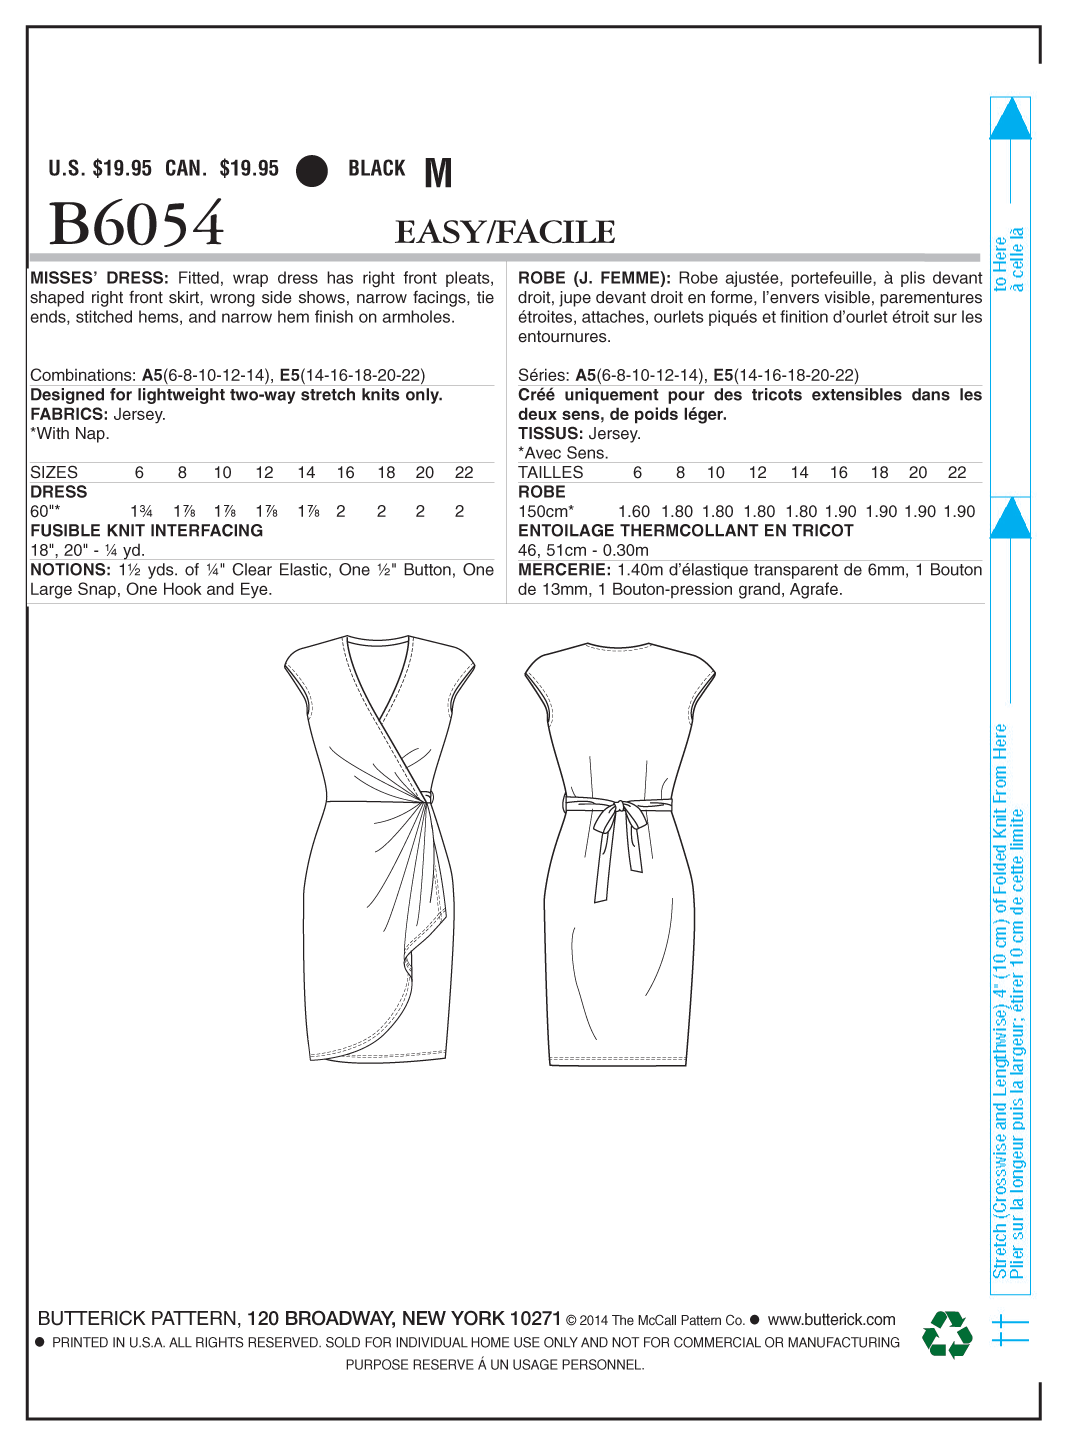 Butterick B6054 Misses' Dress